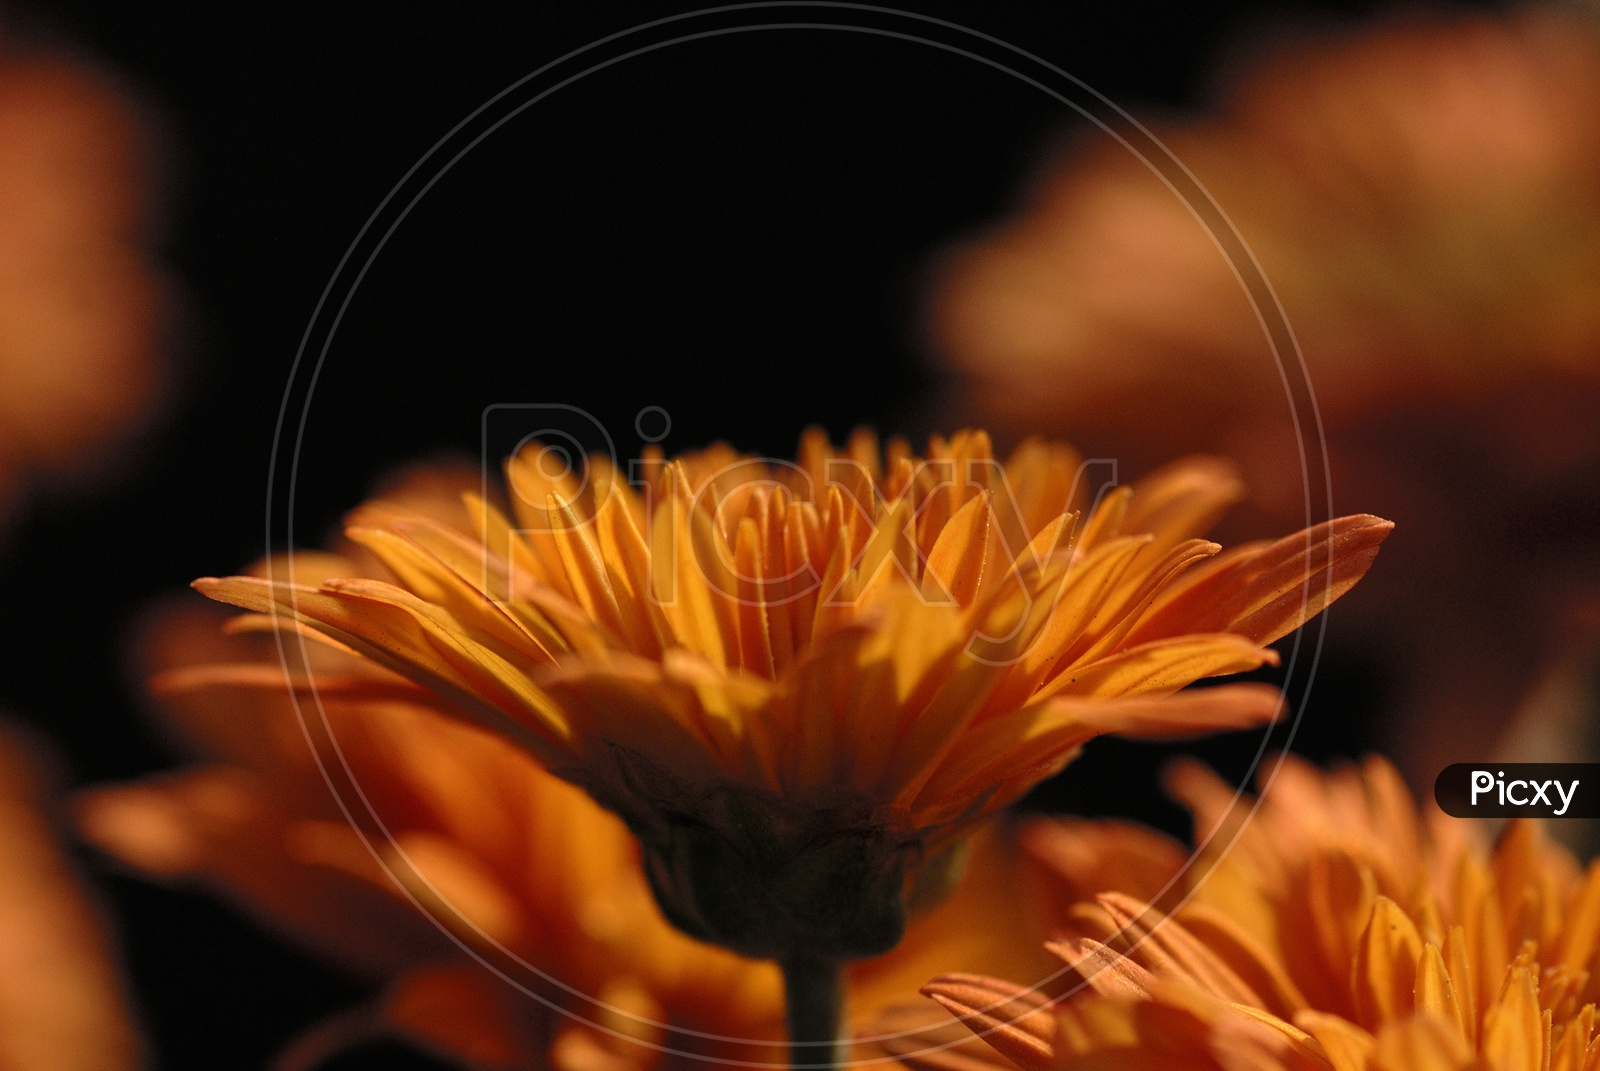 Closeup Of a Gerber Daisy Flower With Petals